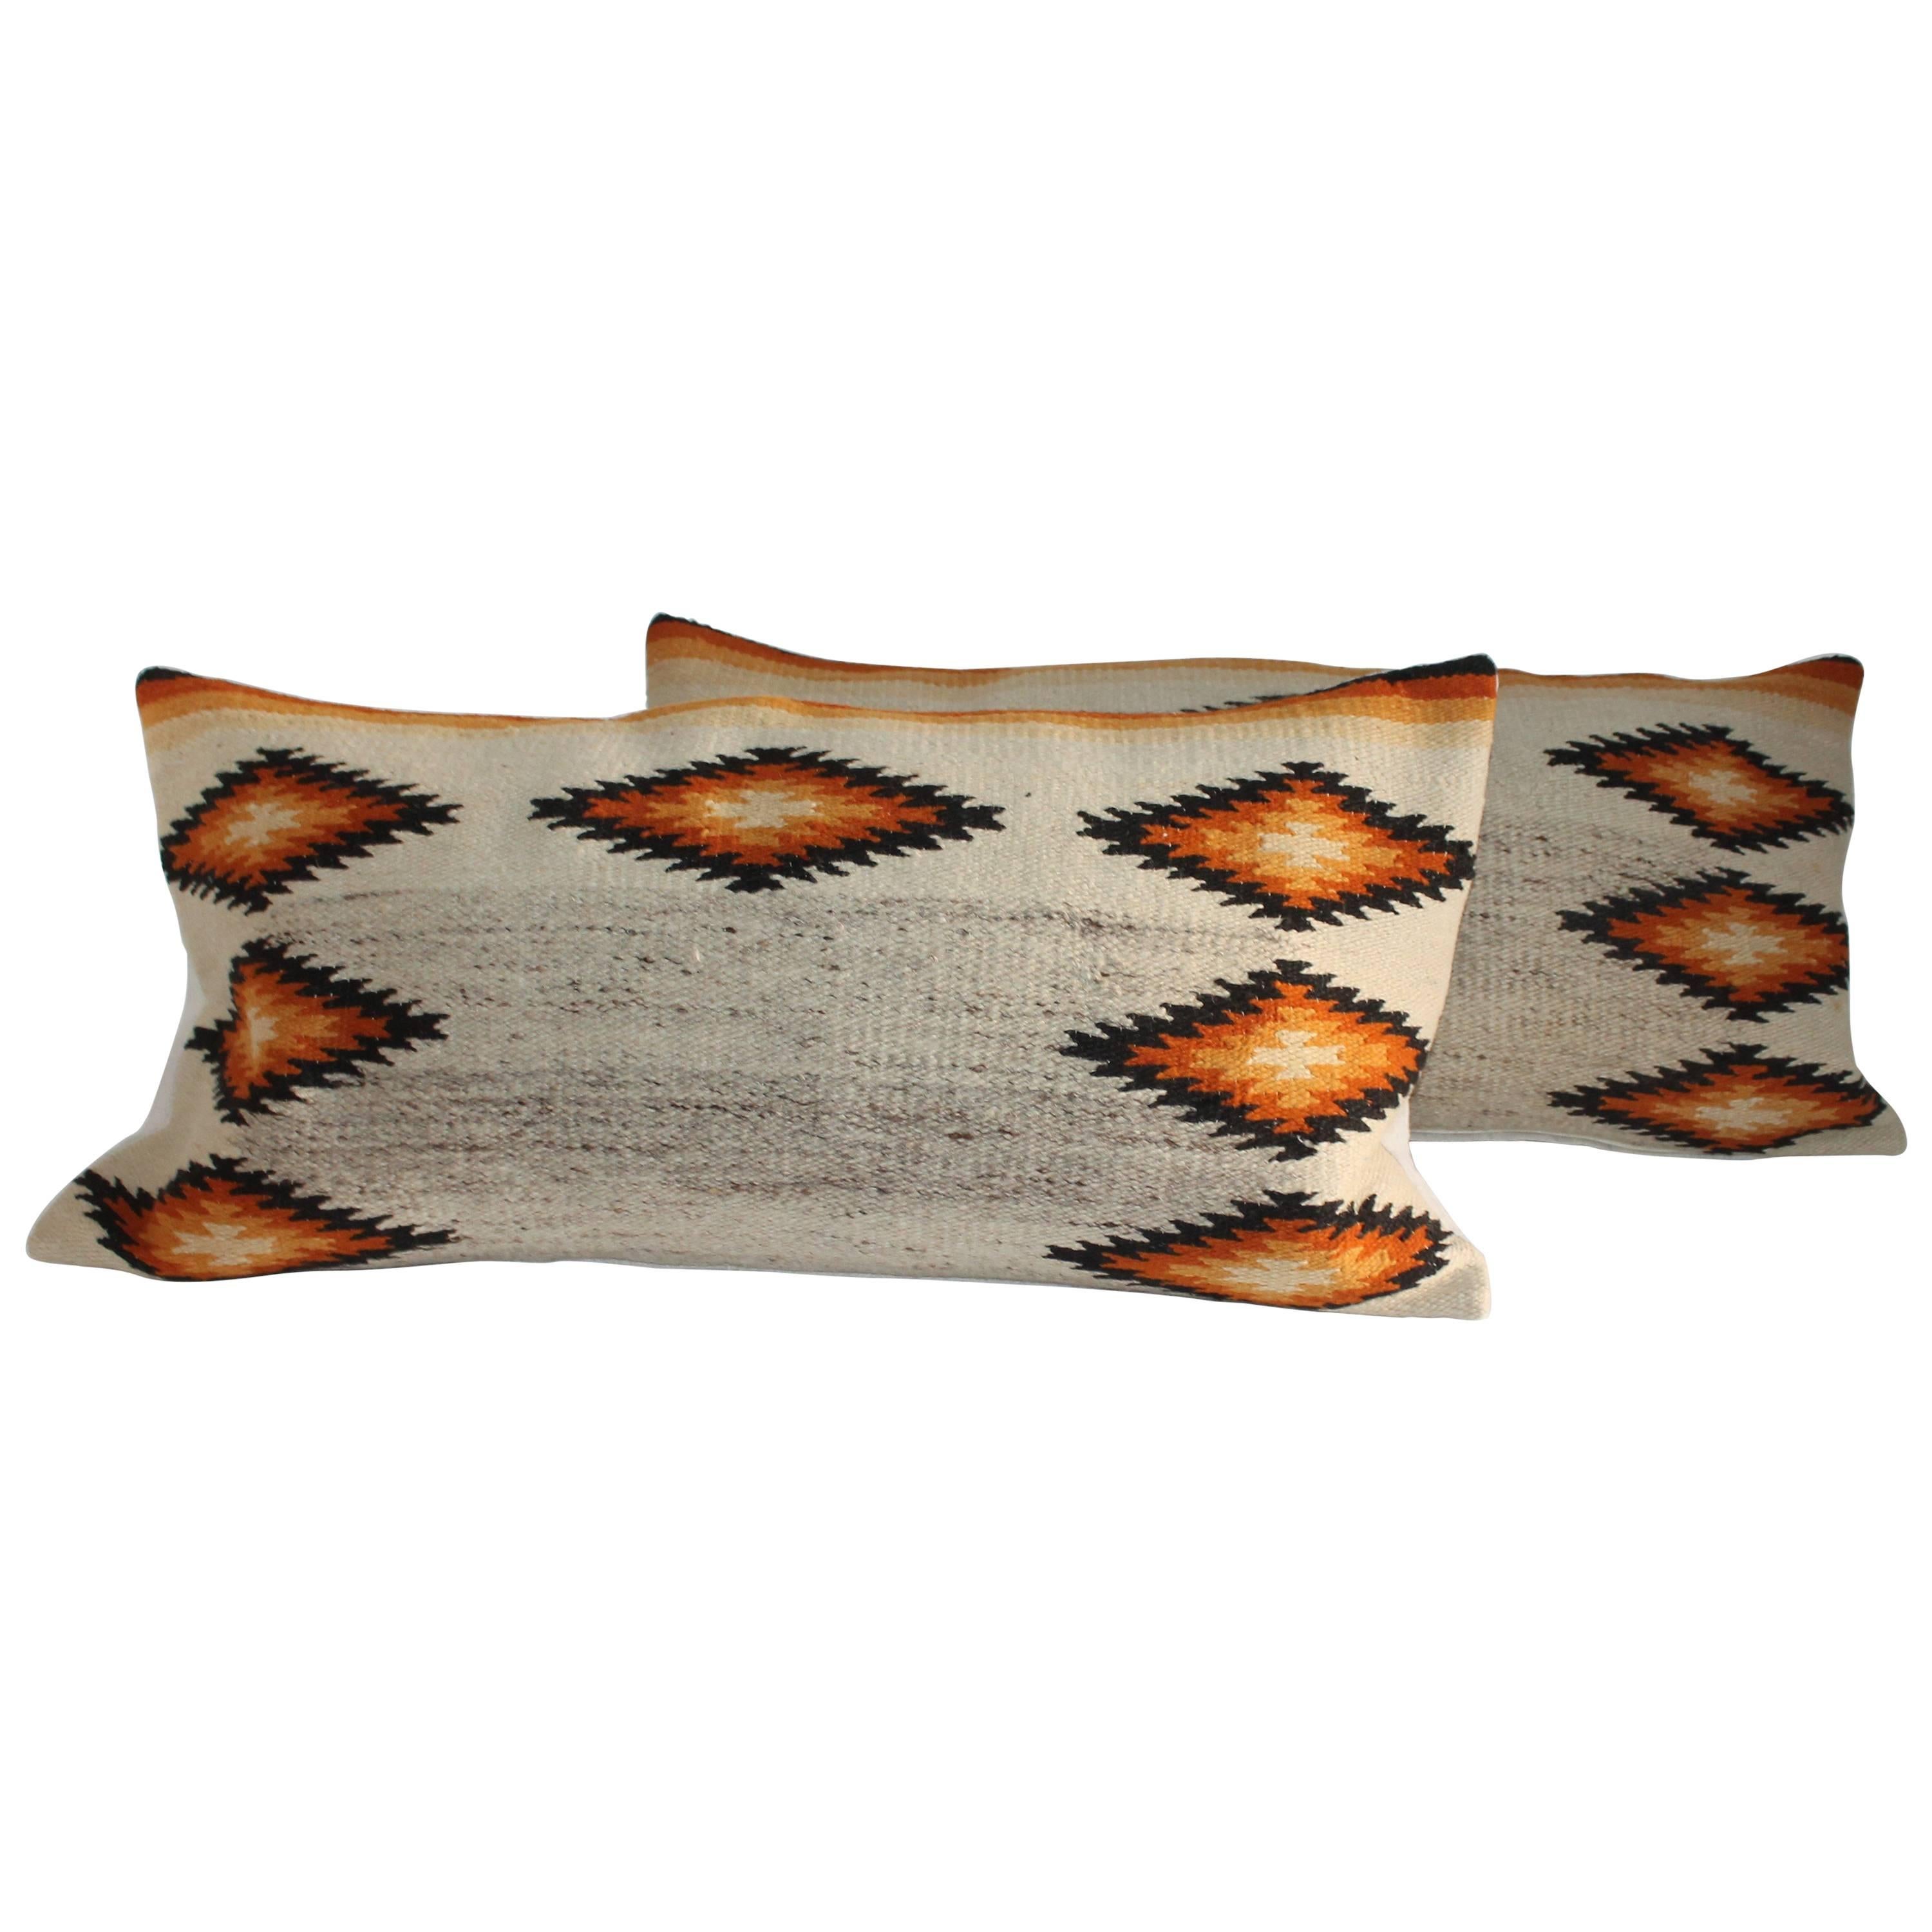 Navajo Indian Weaving Geometric Pillows, Pair